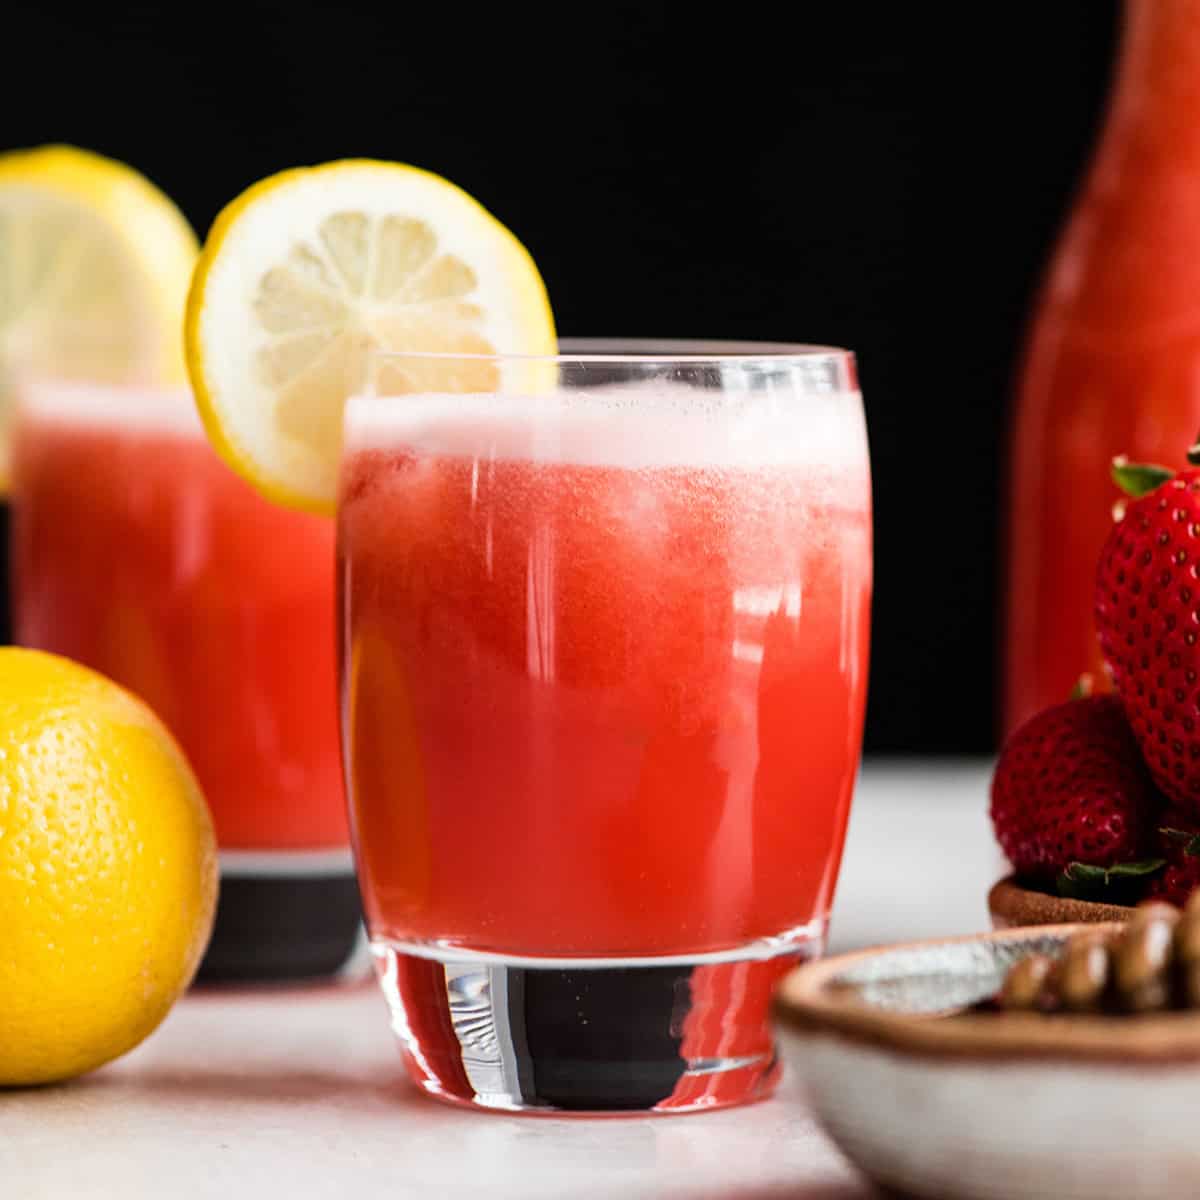 Homemade Strawberry Lemonade in a glass